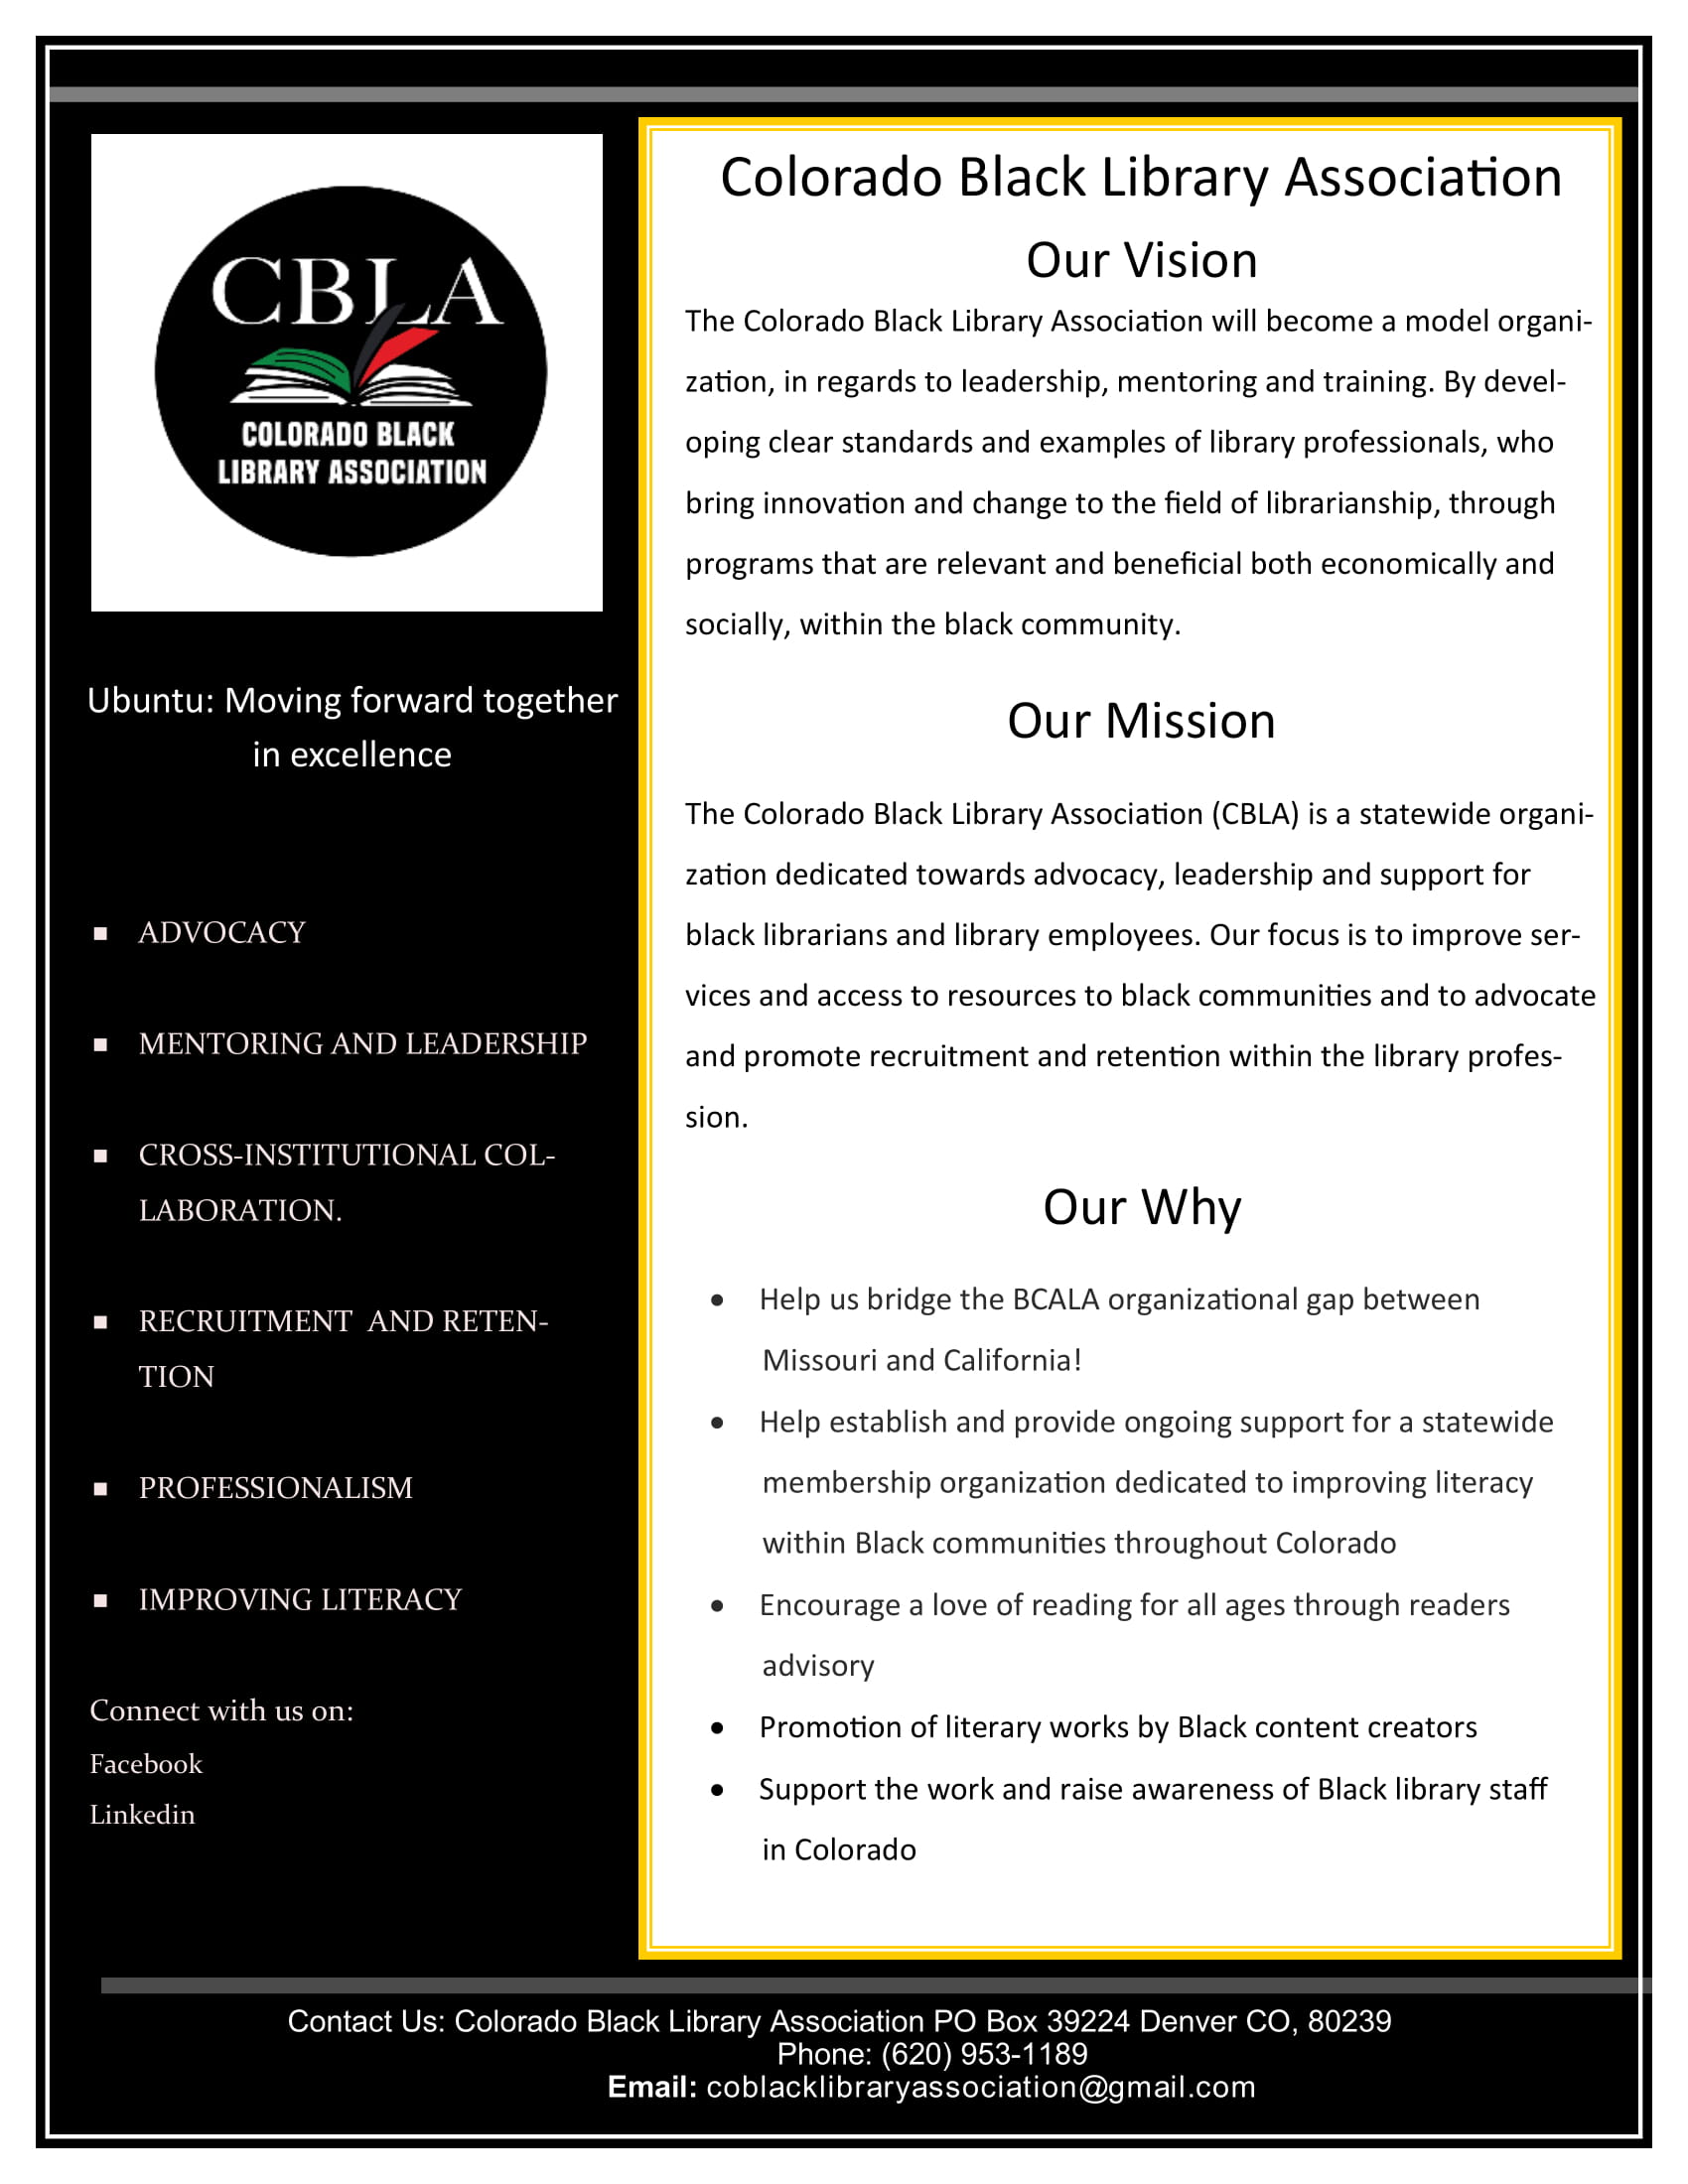 Colorado Black Librarians Association